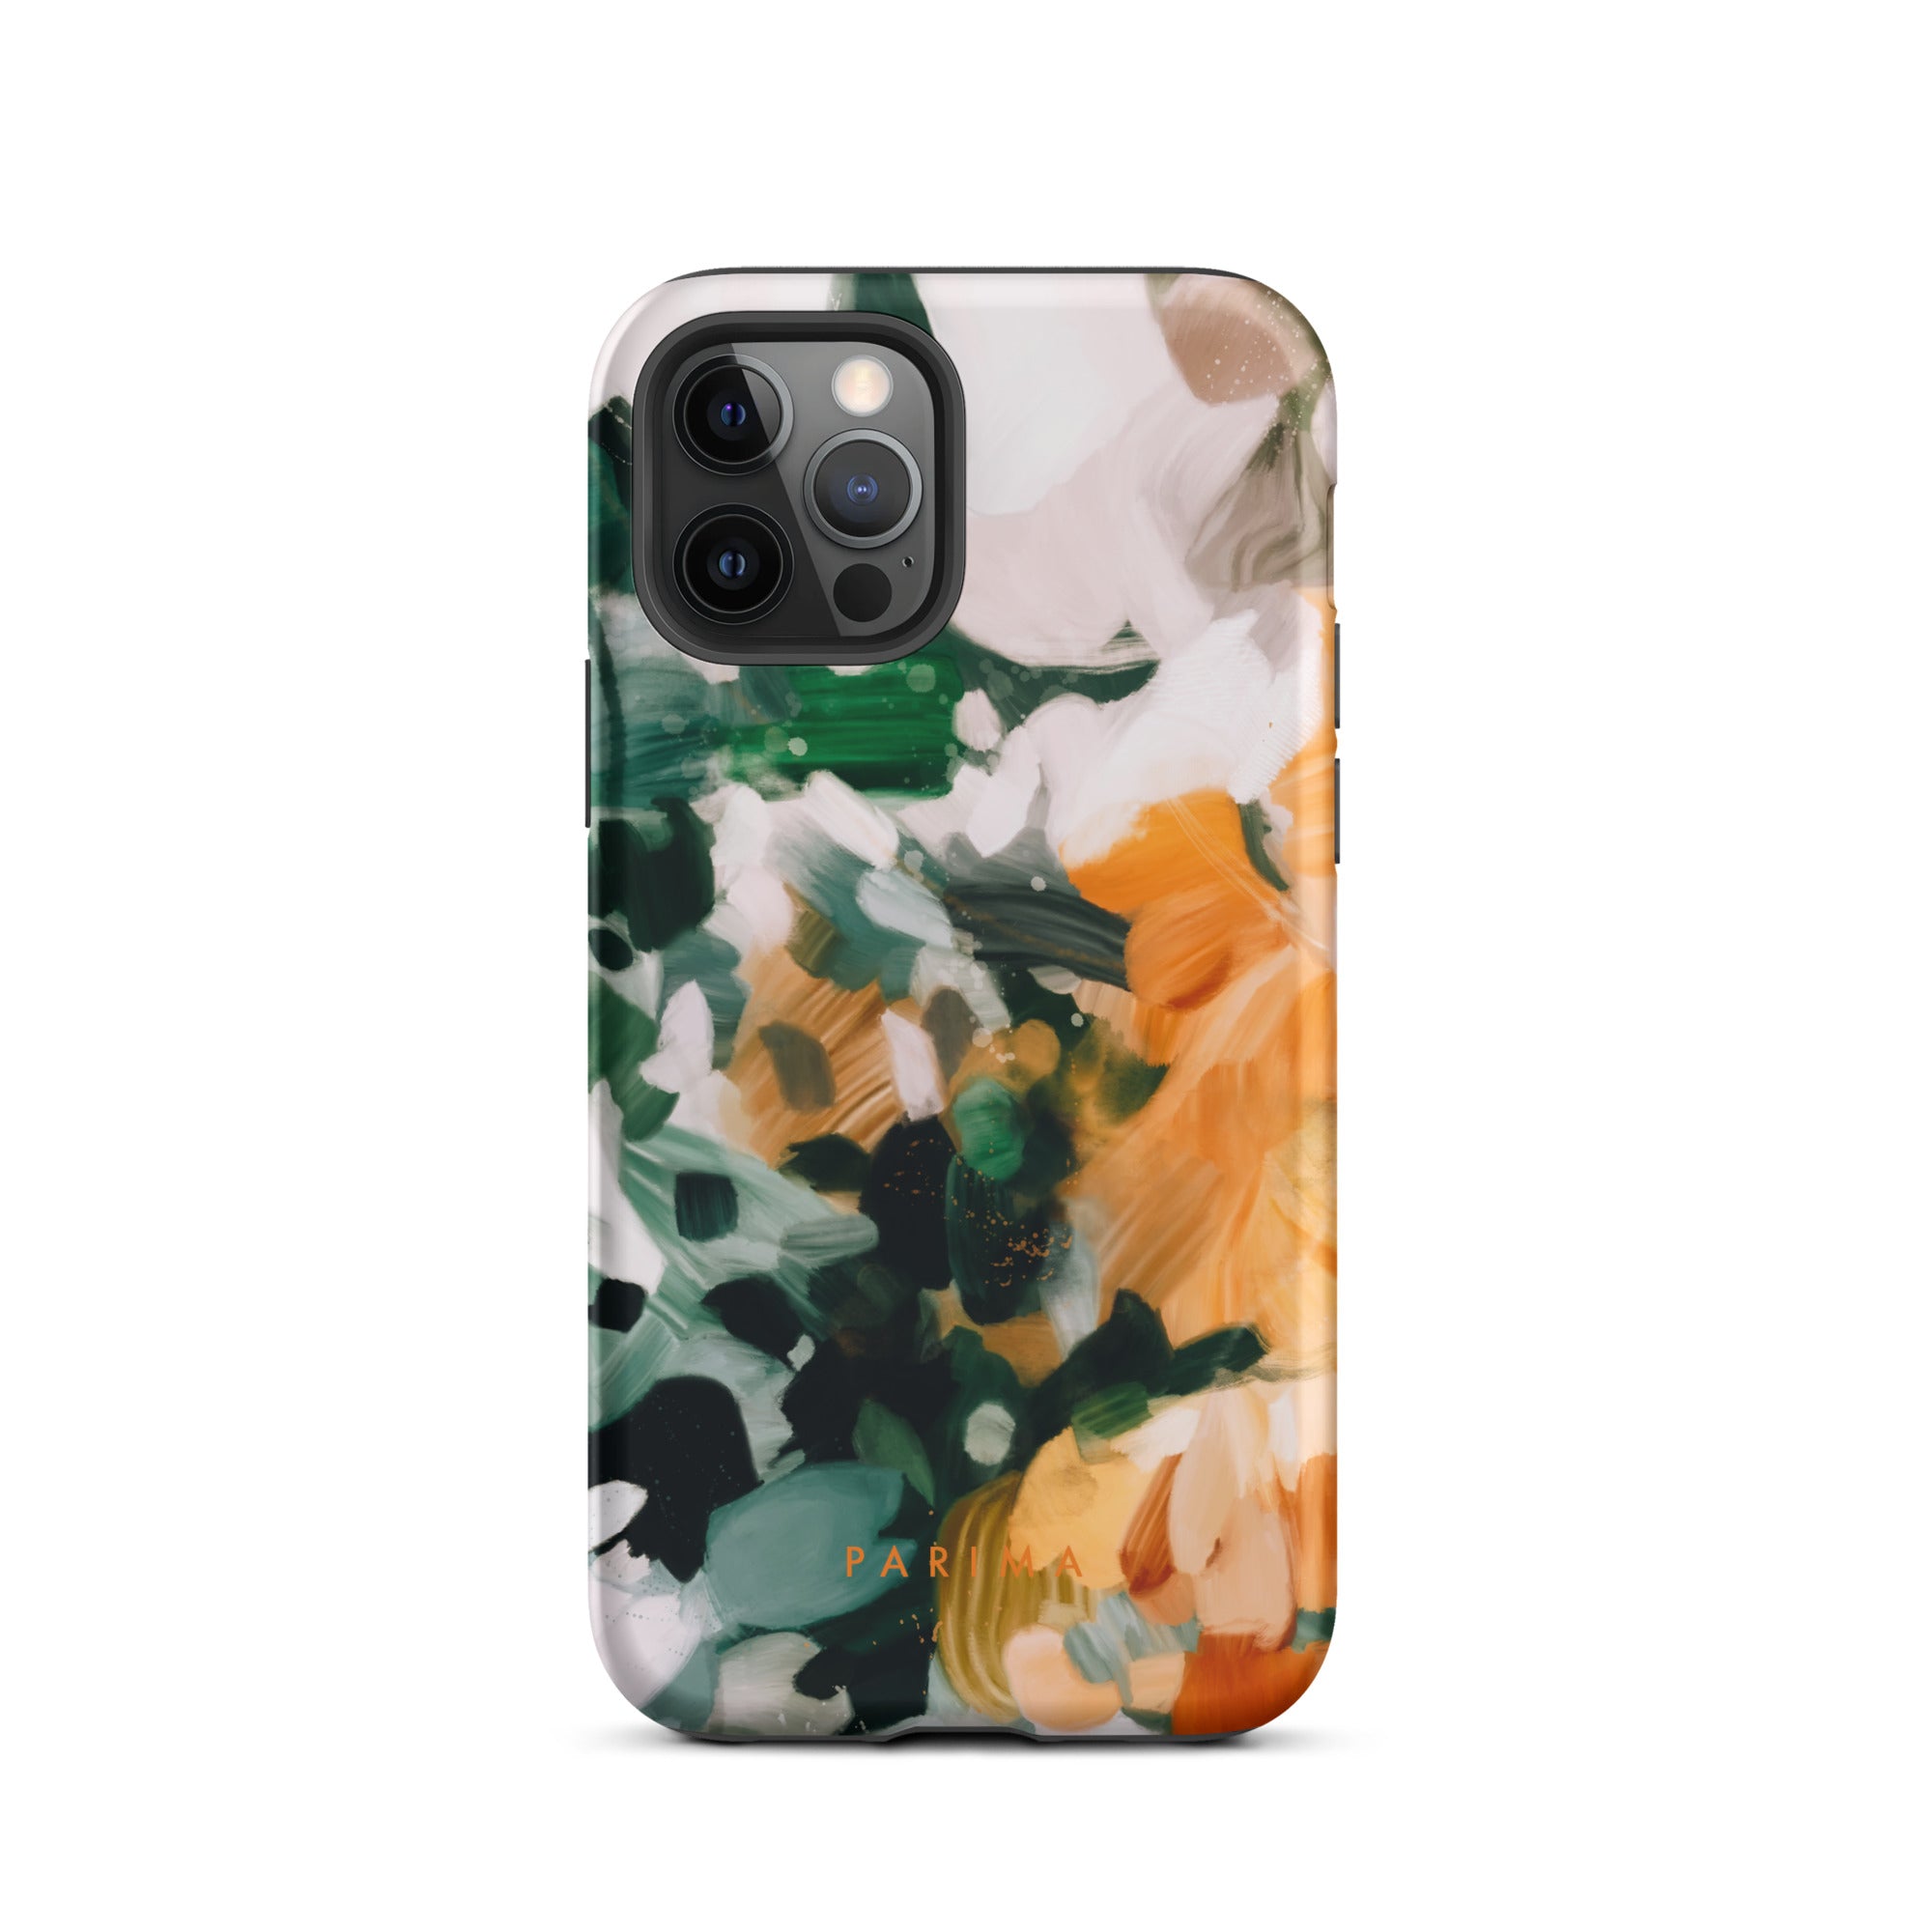 Aspen, green and orange abstract art - iPhone 12 Pro tough case by Parima Studio